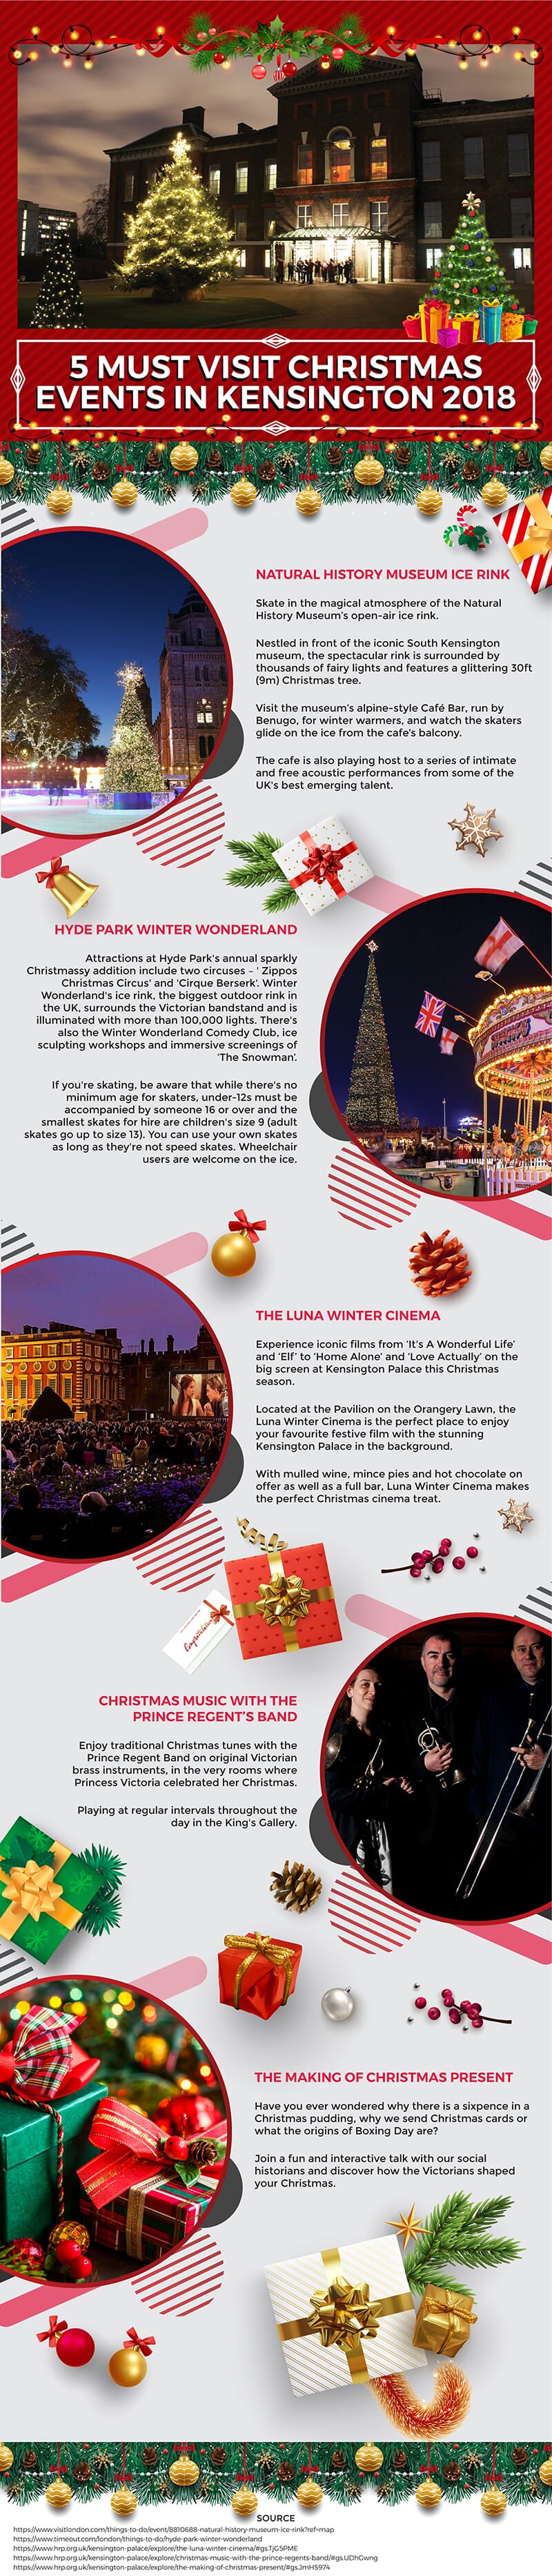 Top 5 Christmas Events in Kensington